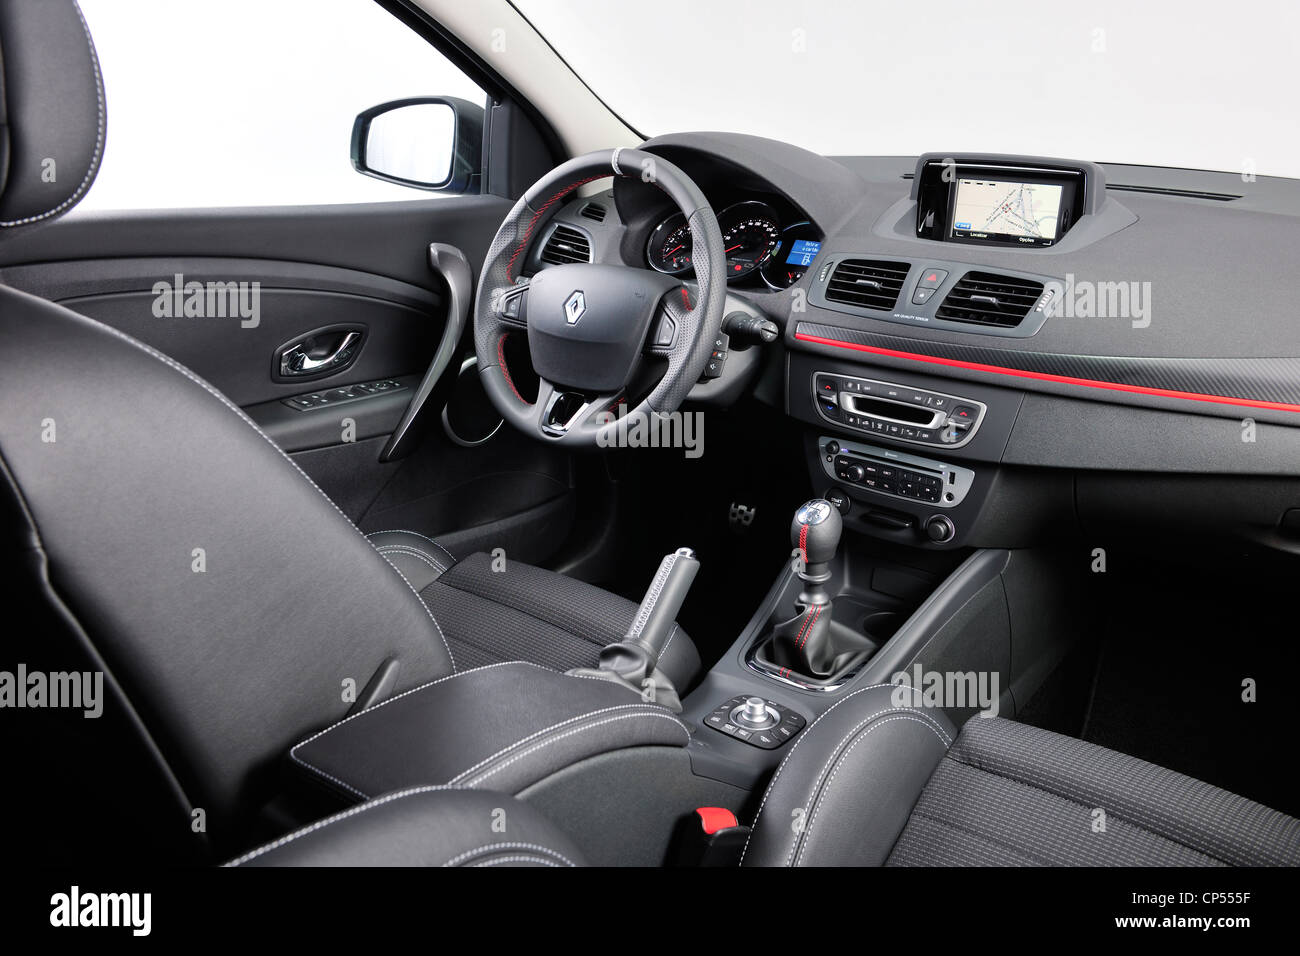 Renault Megane, vehicle interior, studio shot Stock Photo